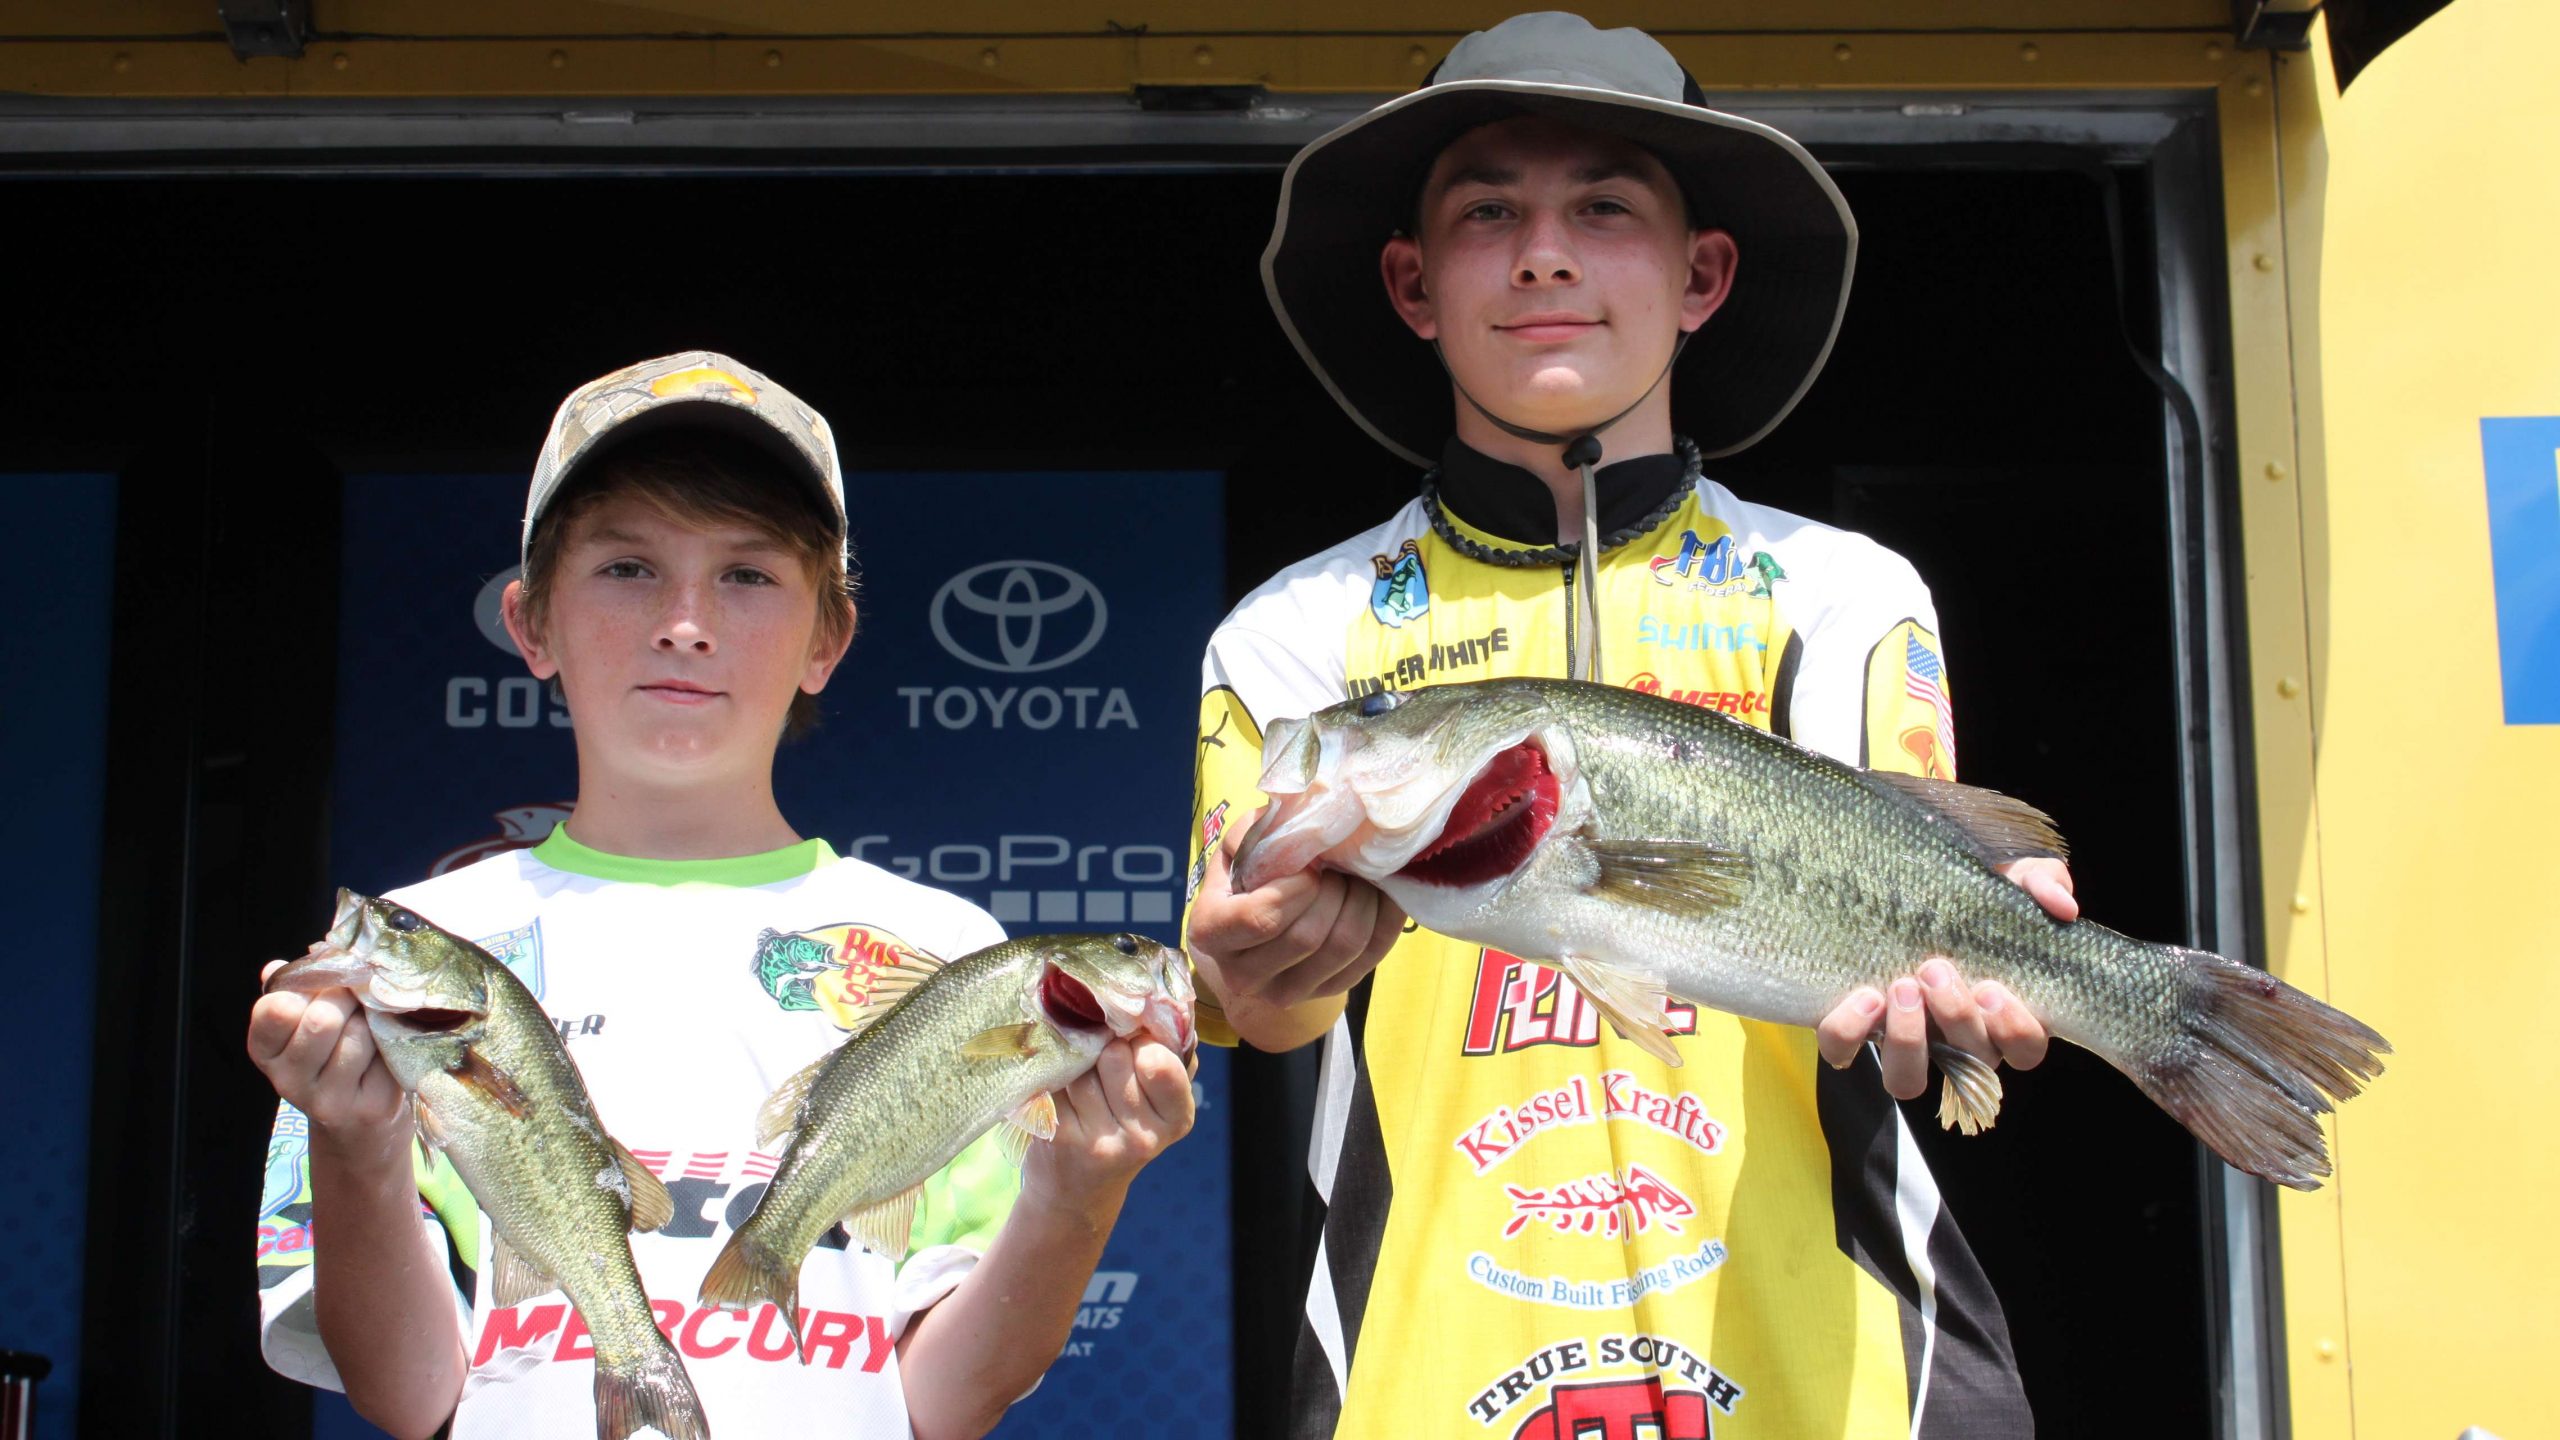 North Carolinaâs Bennett Bauer and Hunter White pose with some nice fish. They placed sixth overall with 9-5 over two days.